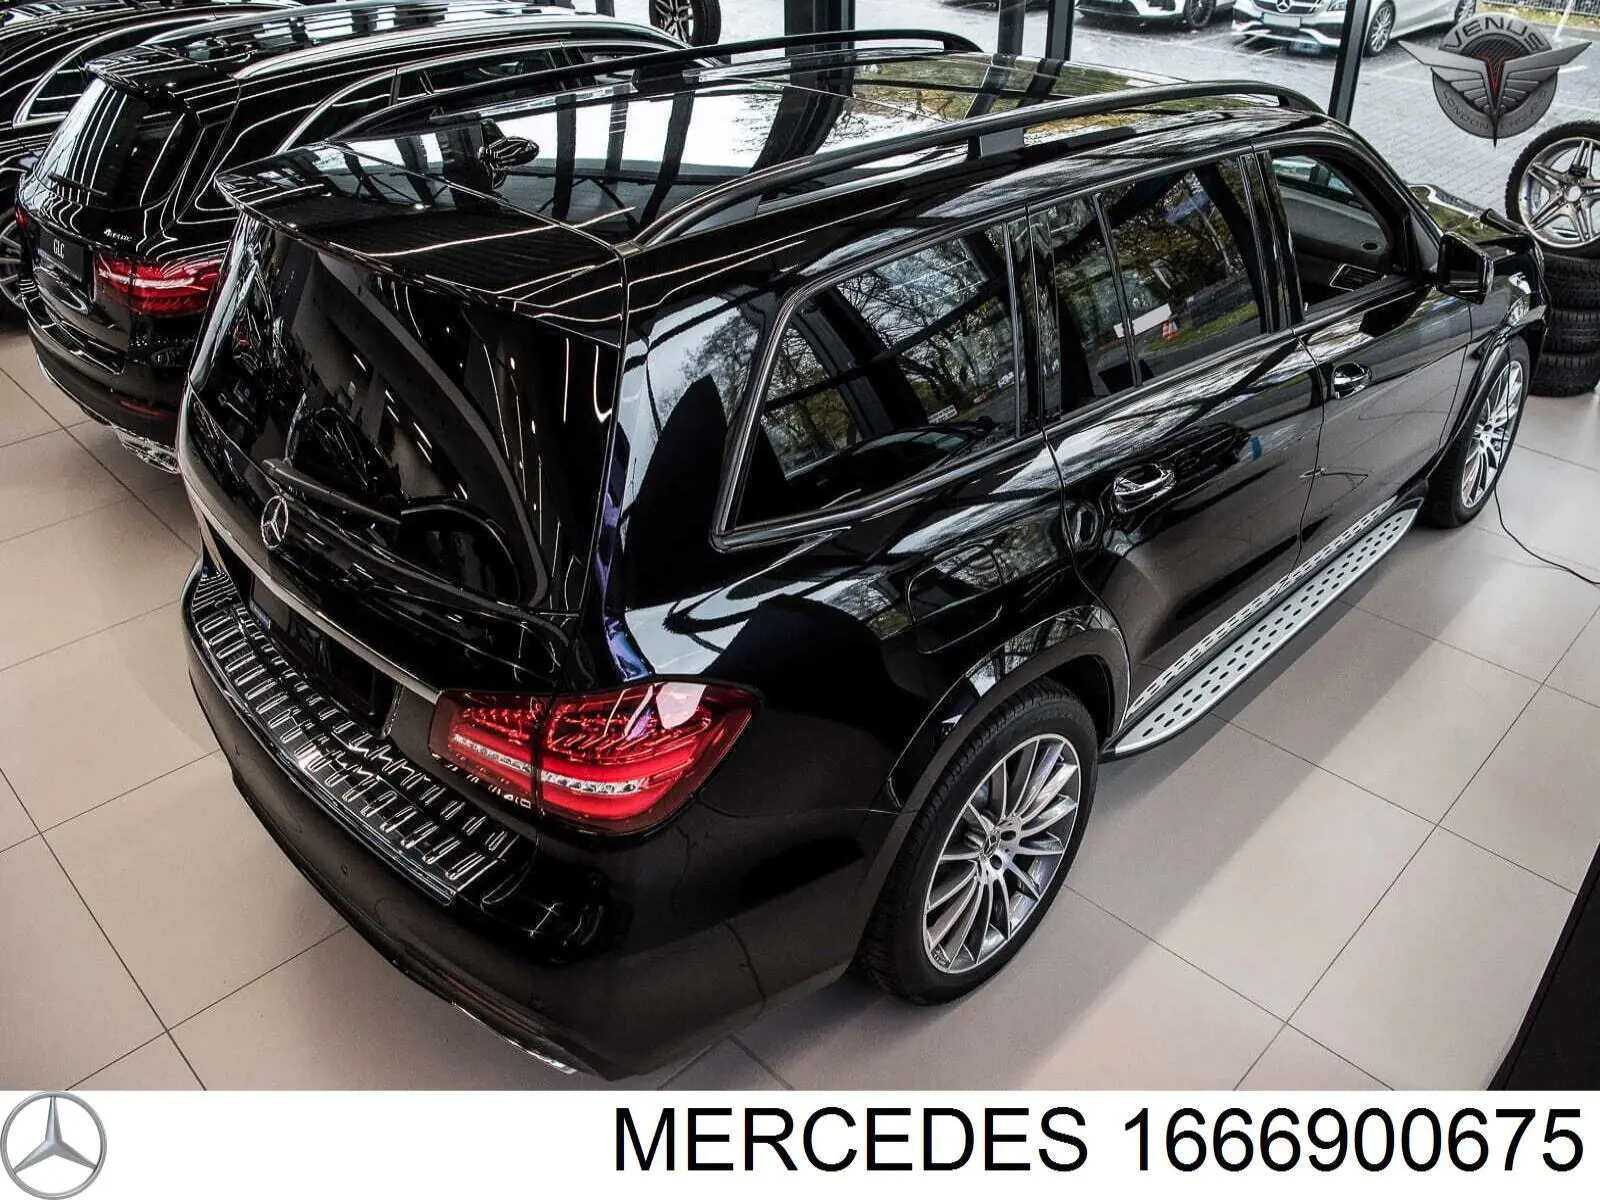 1666900675 Mercedes 